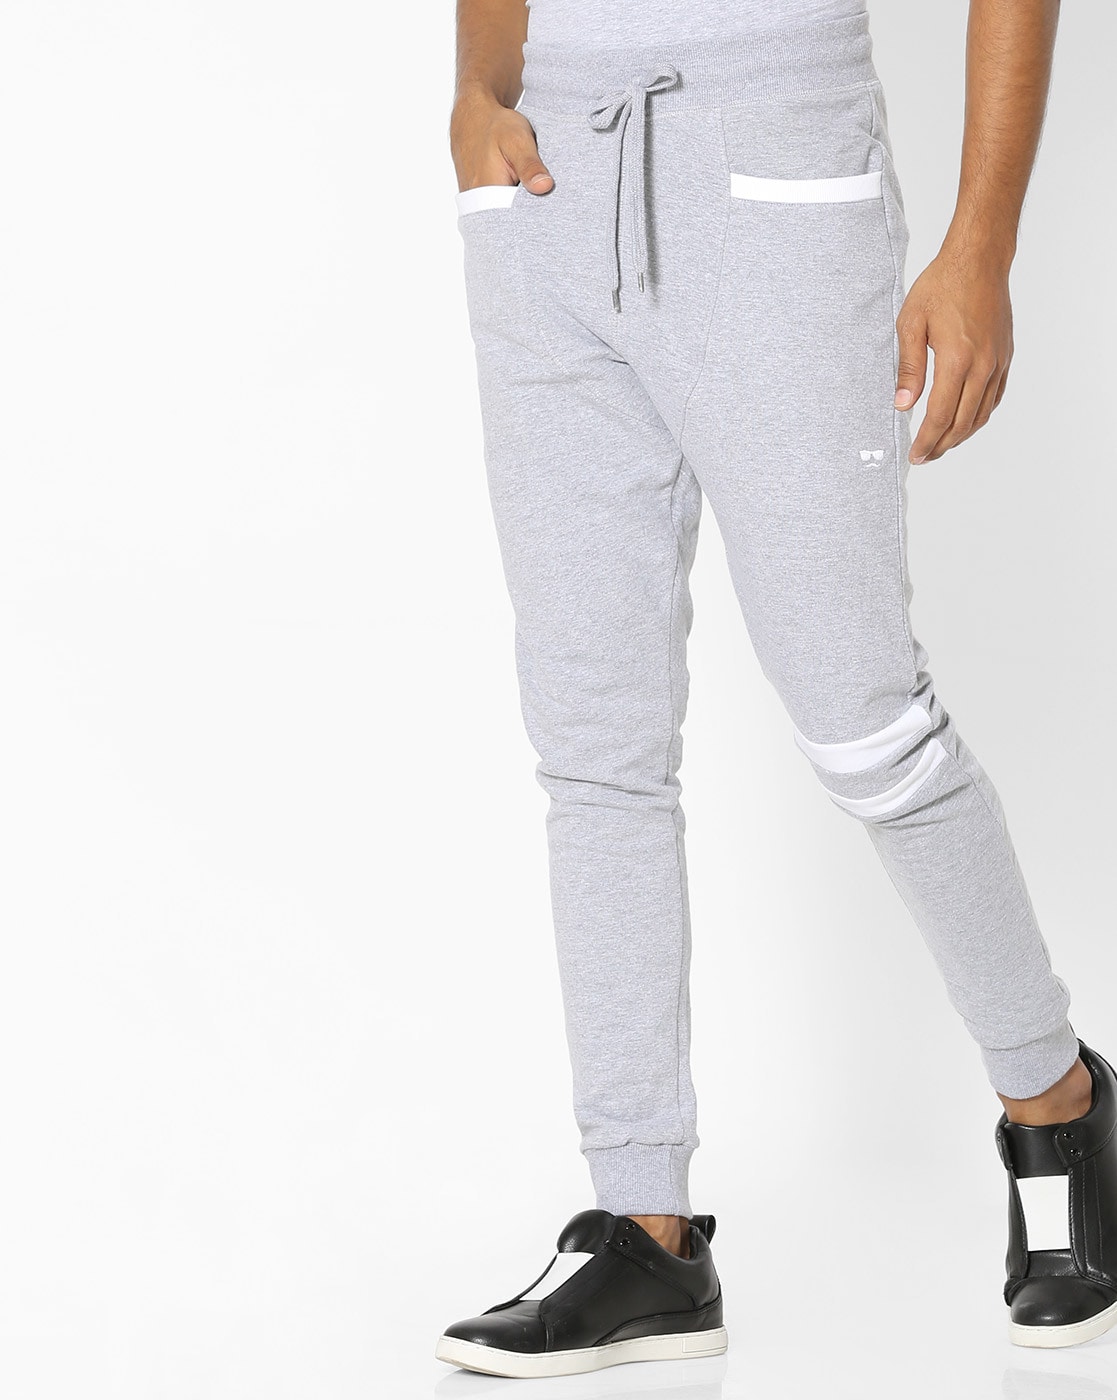 CHKOKKO Sportswear : Buy CHKOKKO Grey Men Sports Gym Track Pant Running  Lower with Pocket Online | Nykaa Fashion.